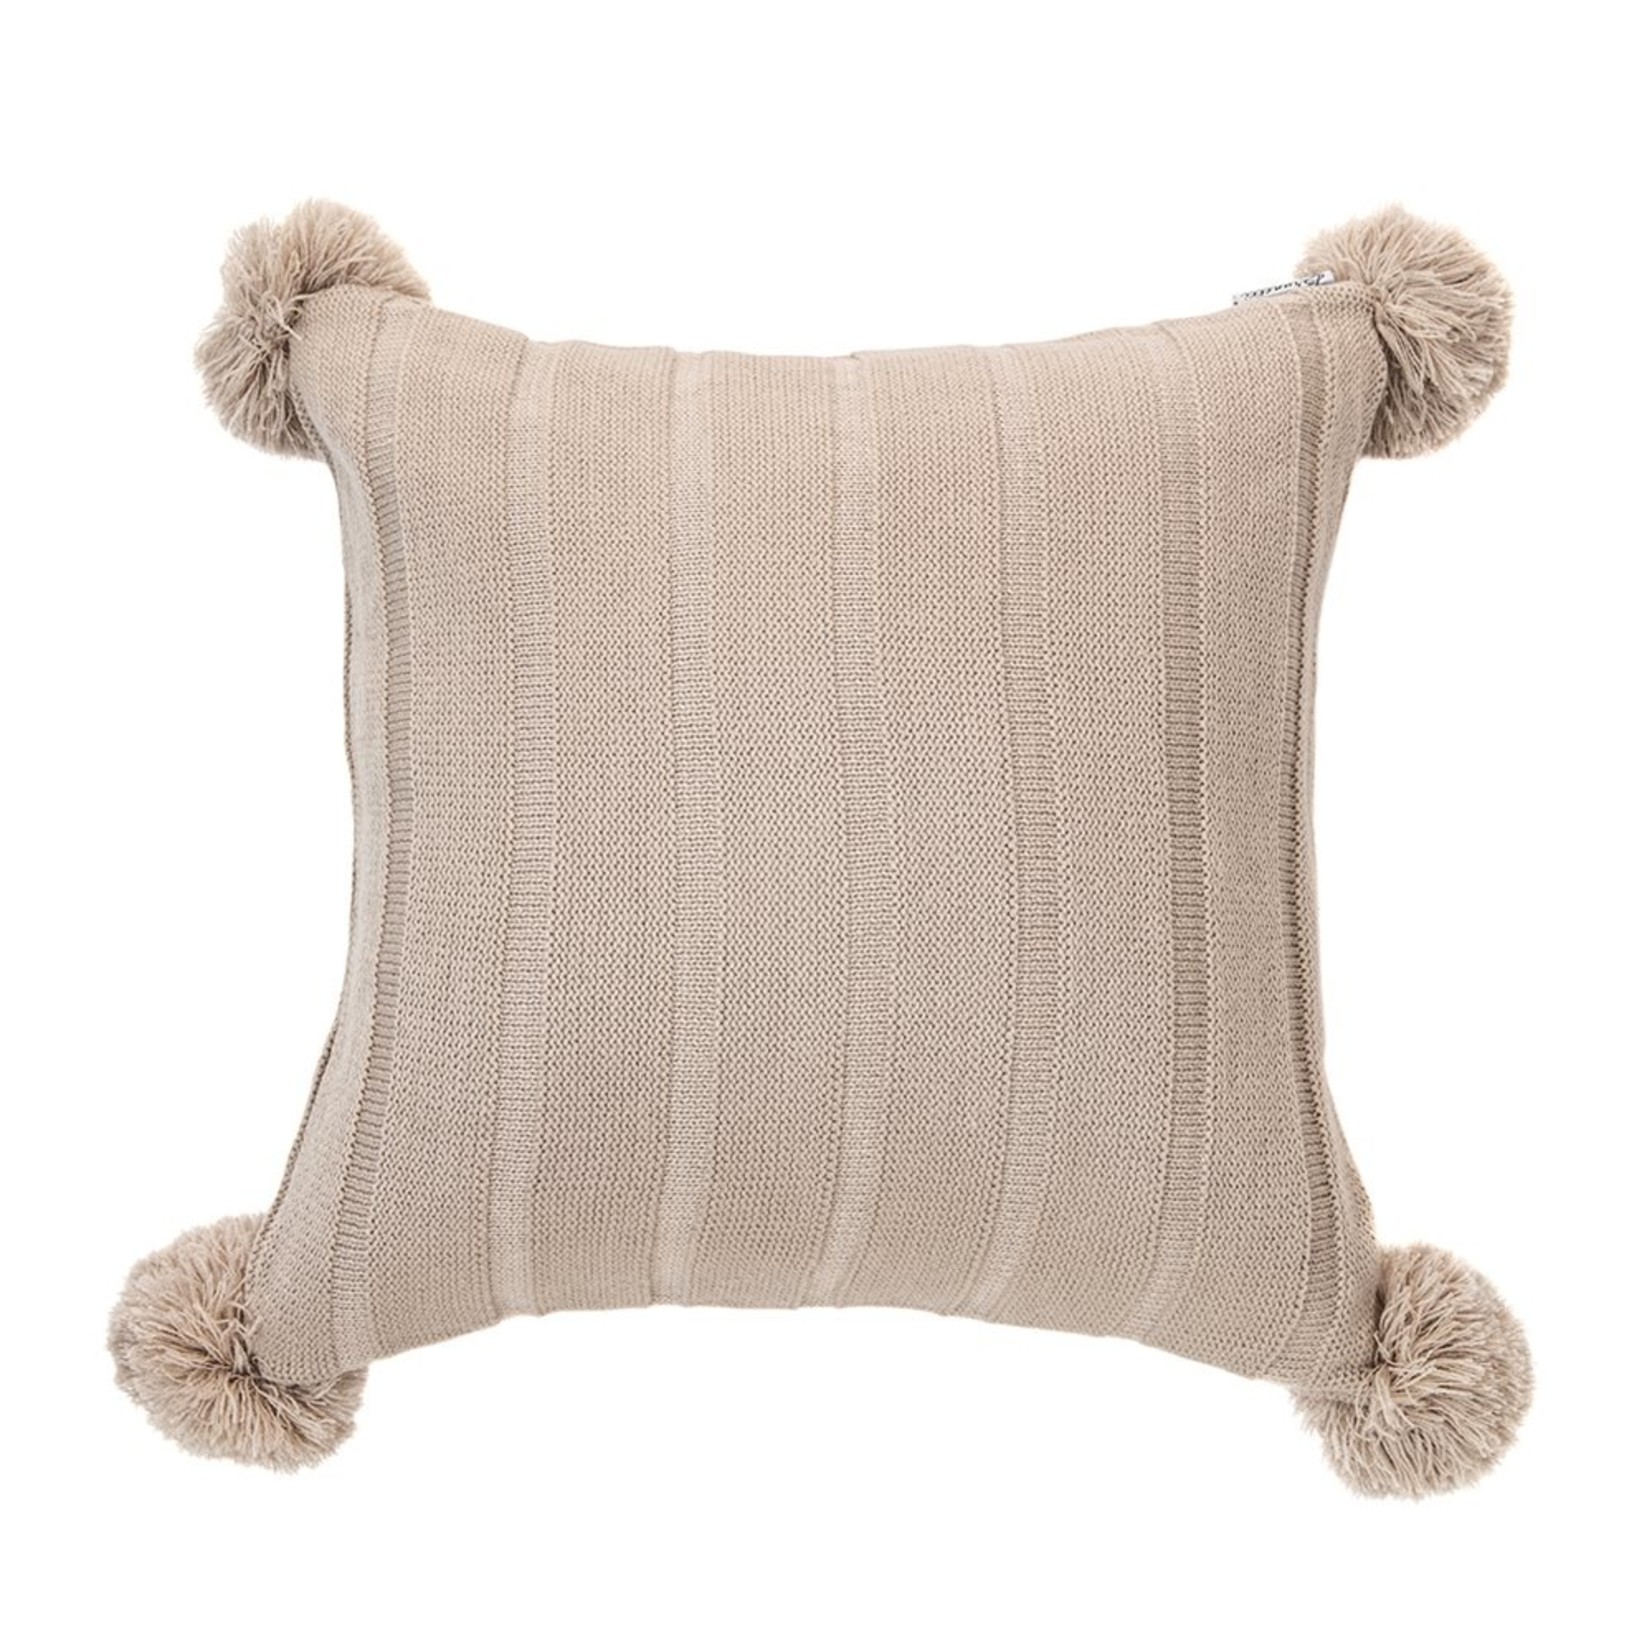 Brunelli Ragu Knitted Taupe Cushion